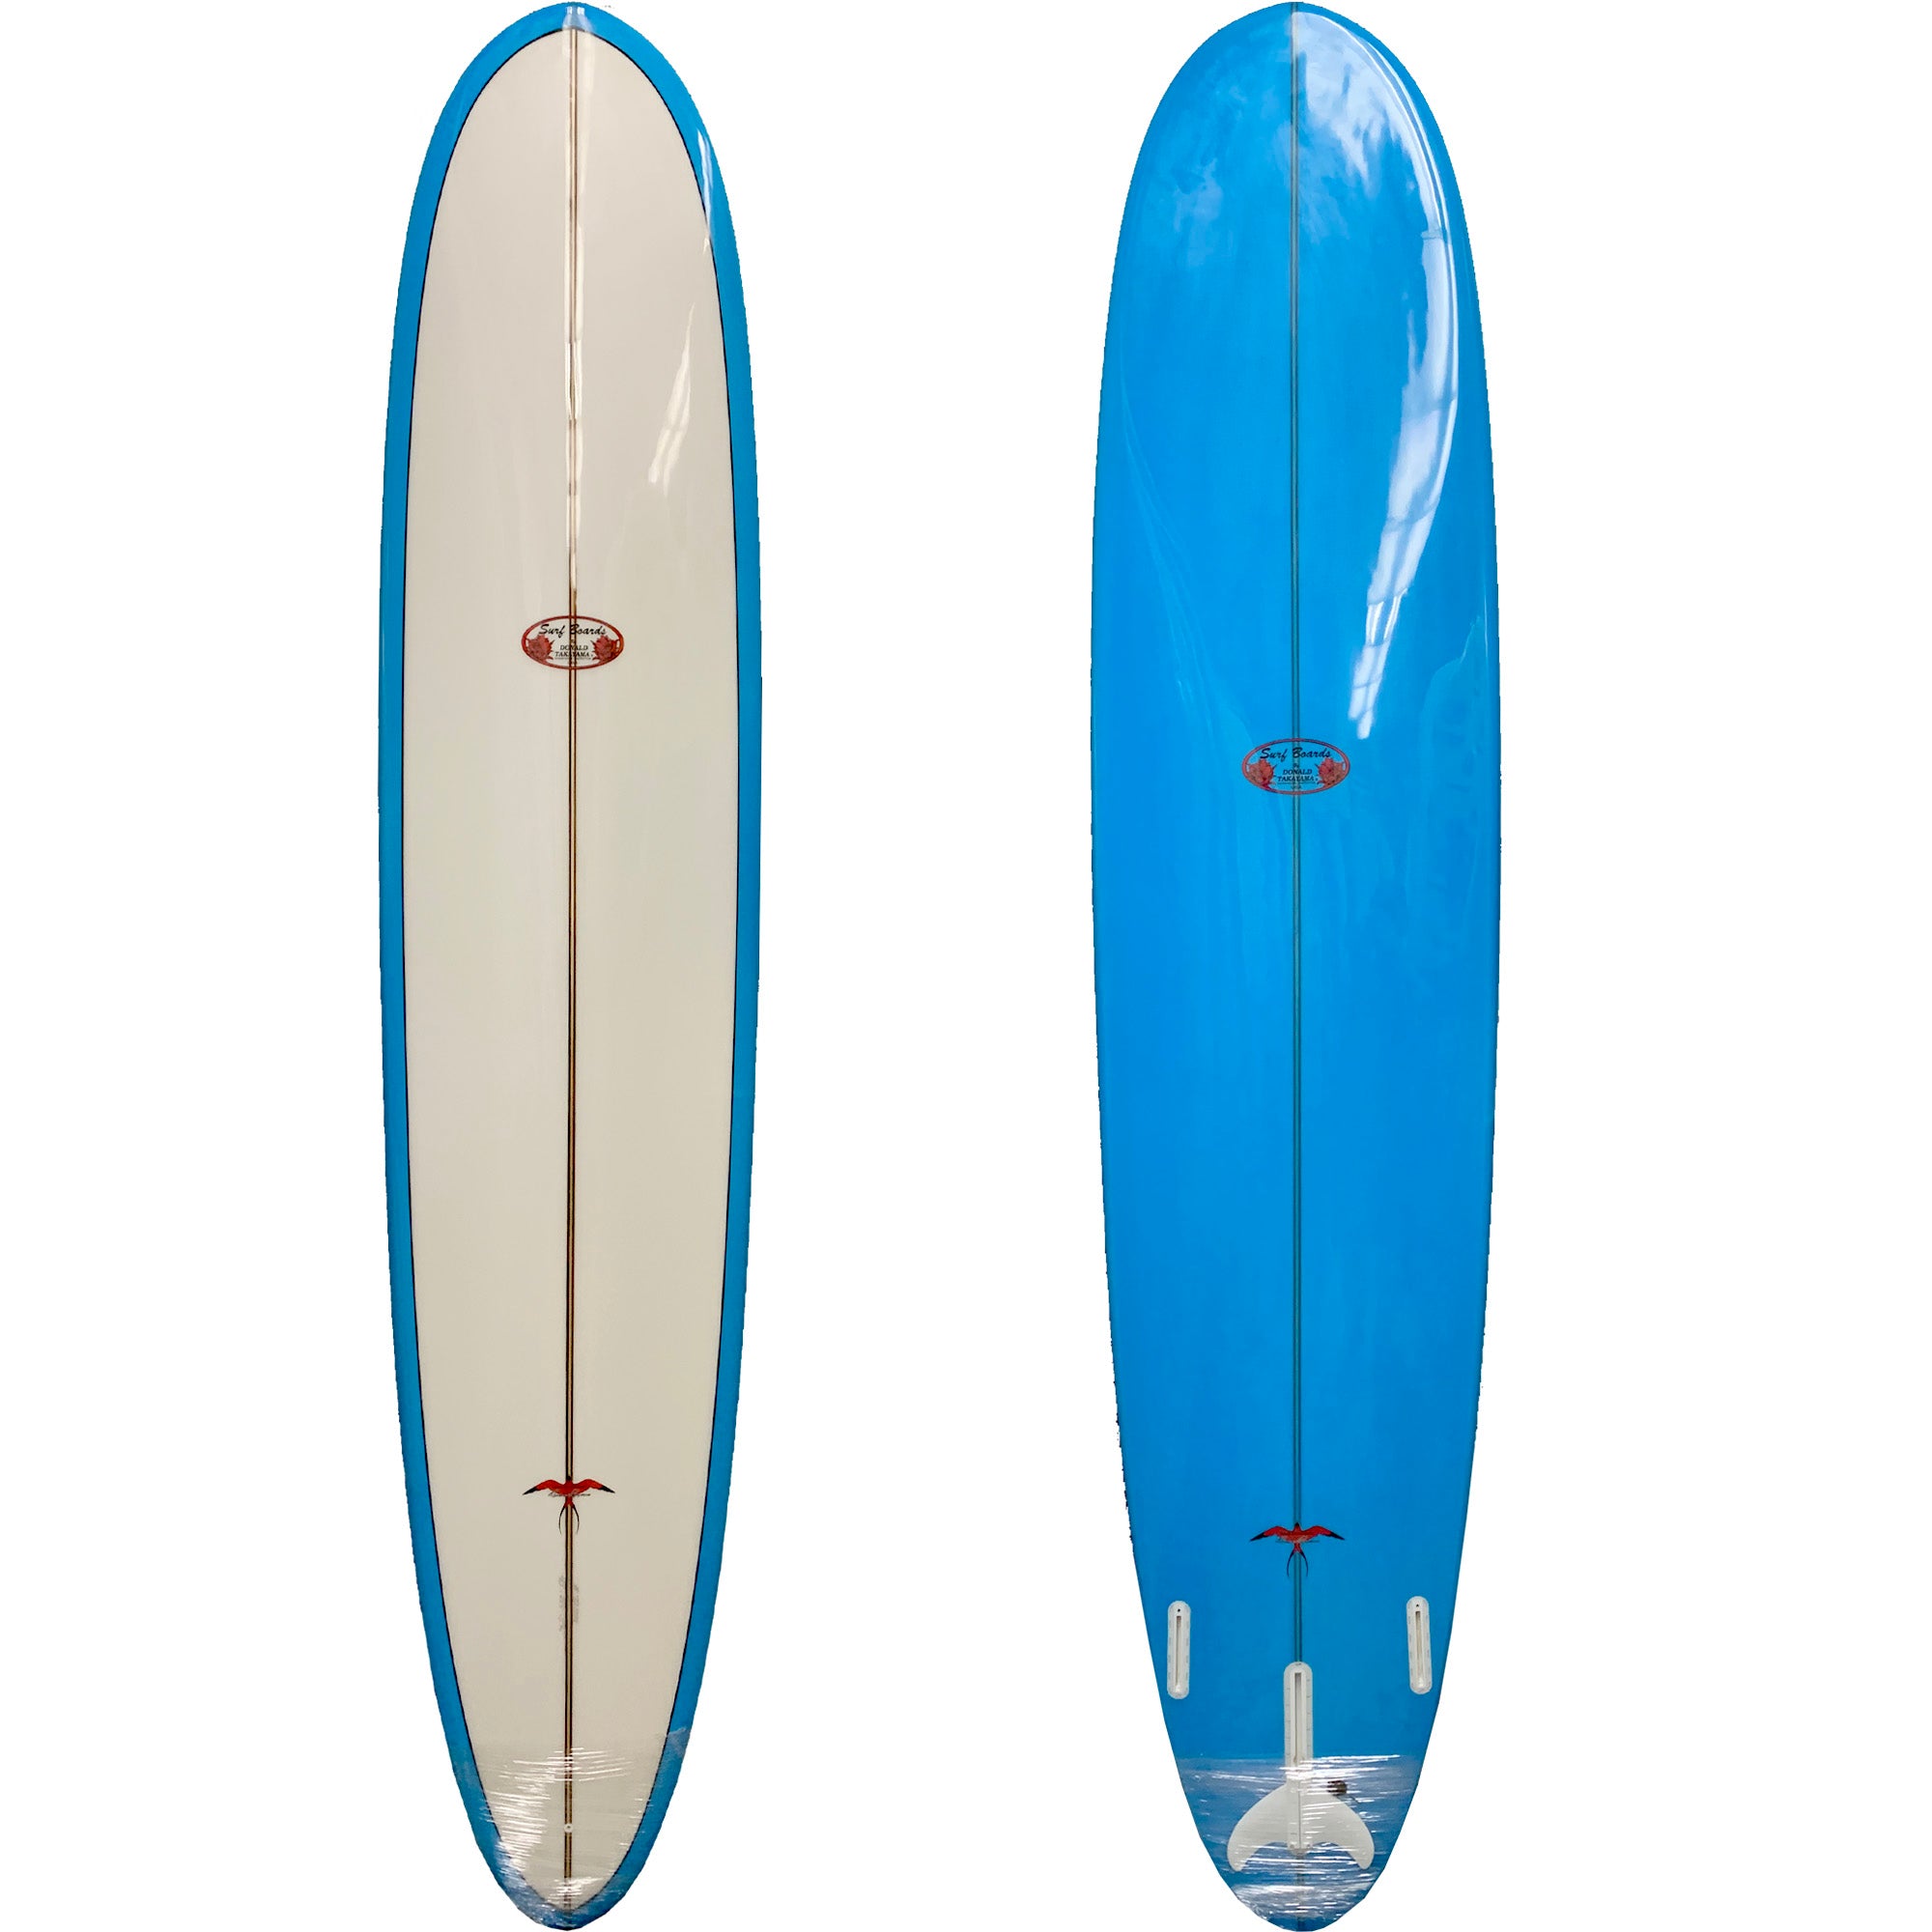 PLANCHE DE SURF TAKAYAMA SCORPION 2 6'4'' RED/GREY - TAKAYAMA - MARQUES -  Tablas Surf Shop